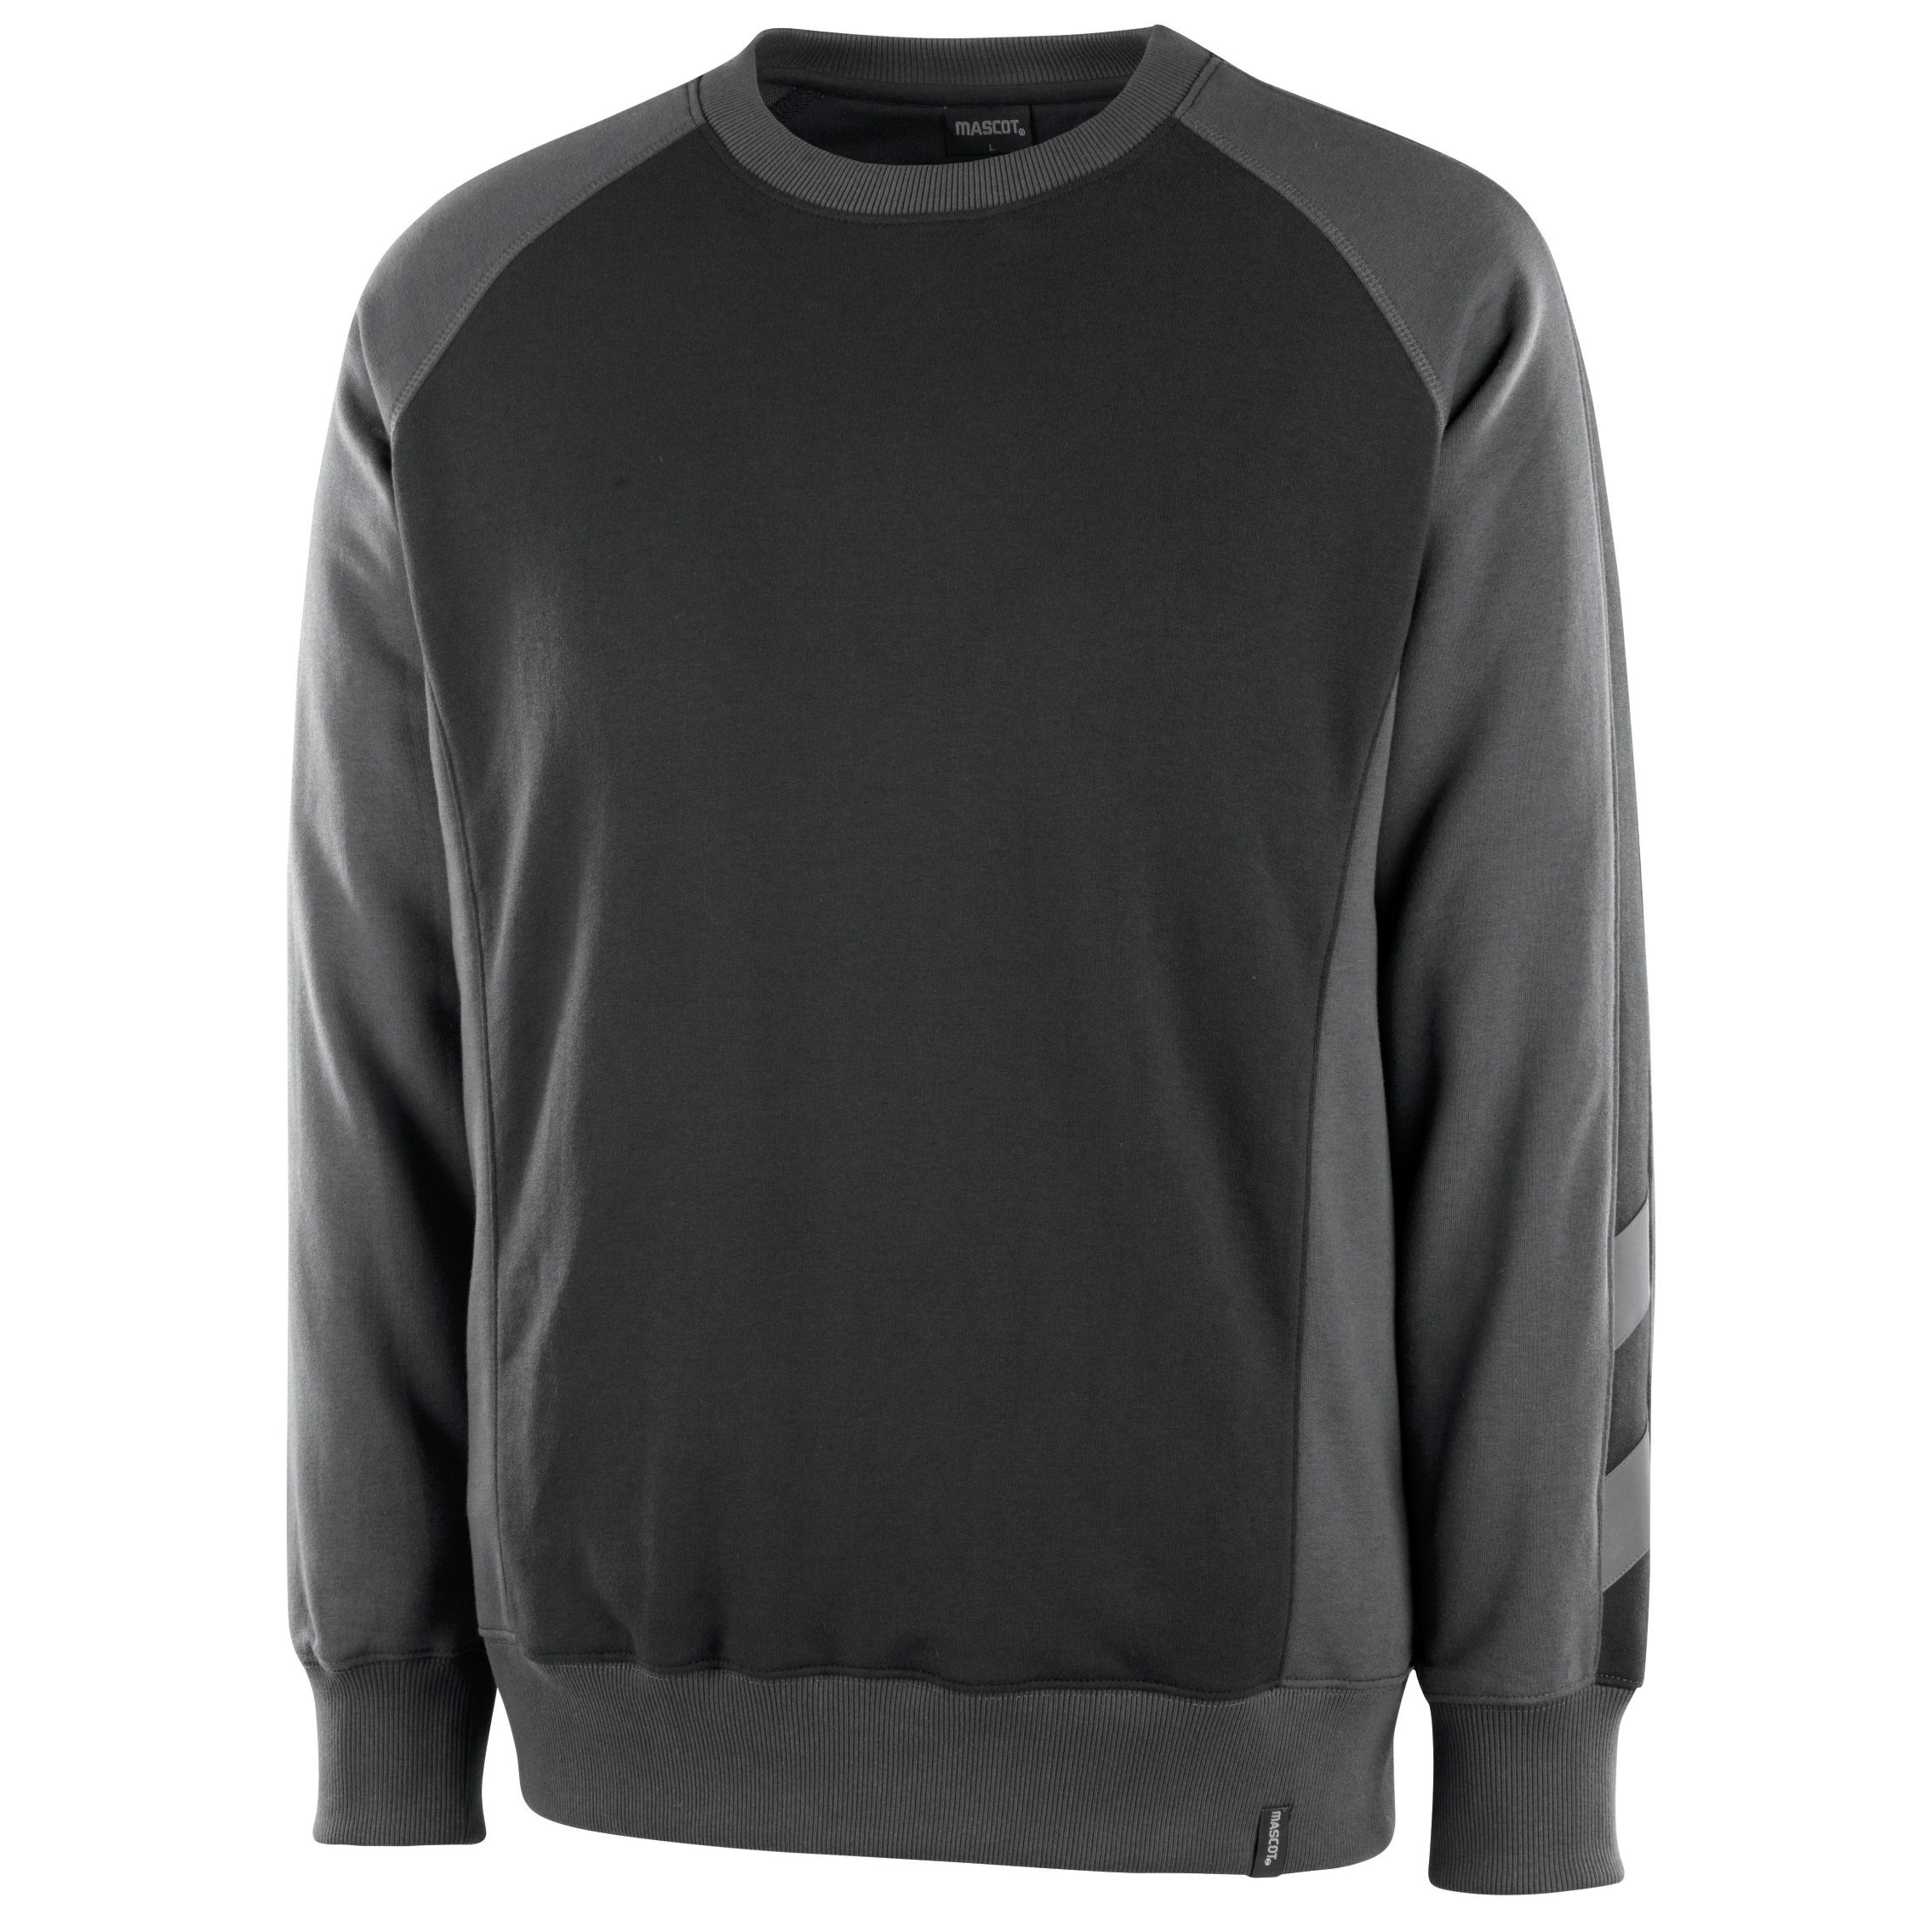 Mascot Witten Sweatshirt Black/Dark Anthracite